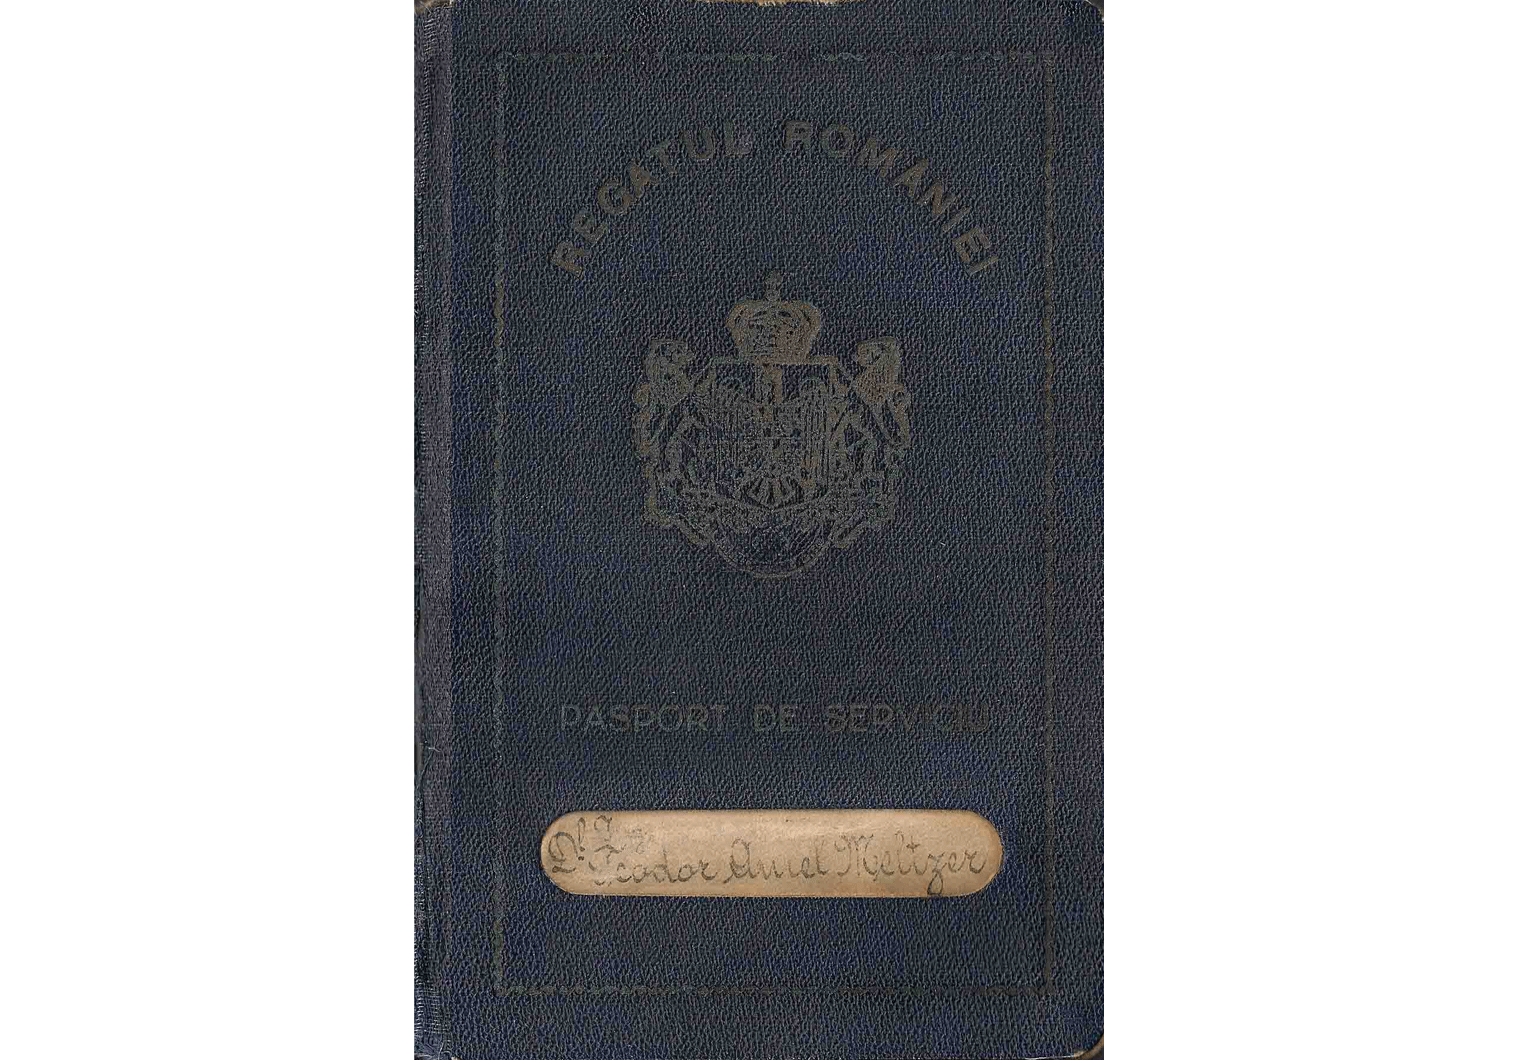 Another WW2 Service passport